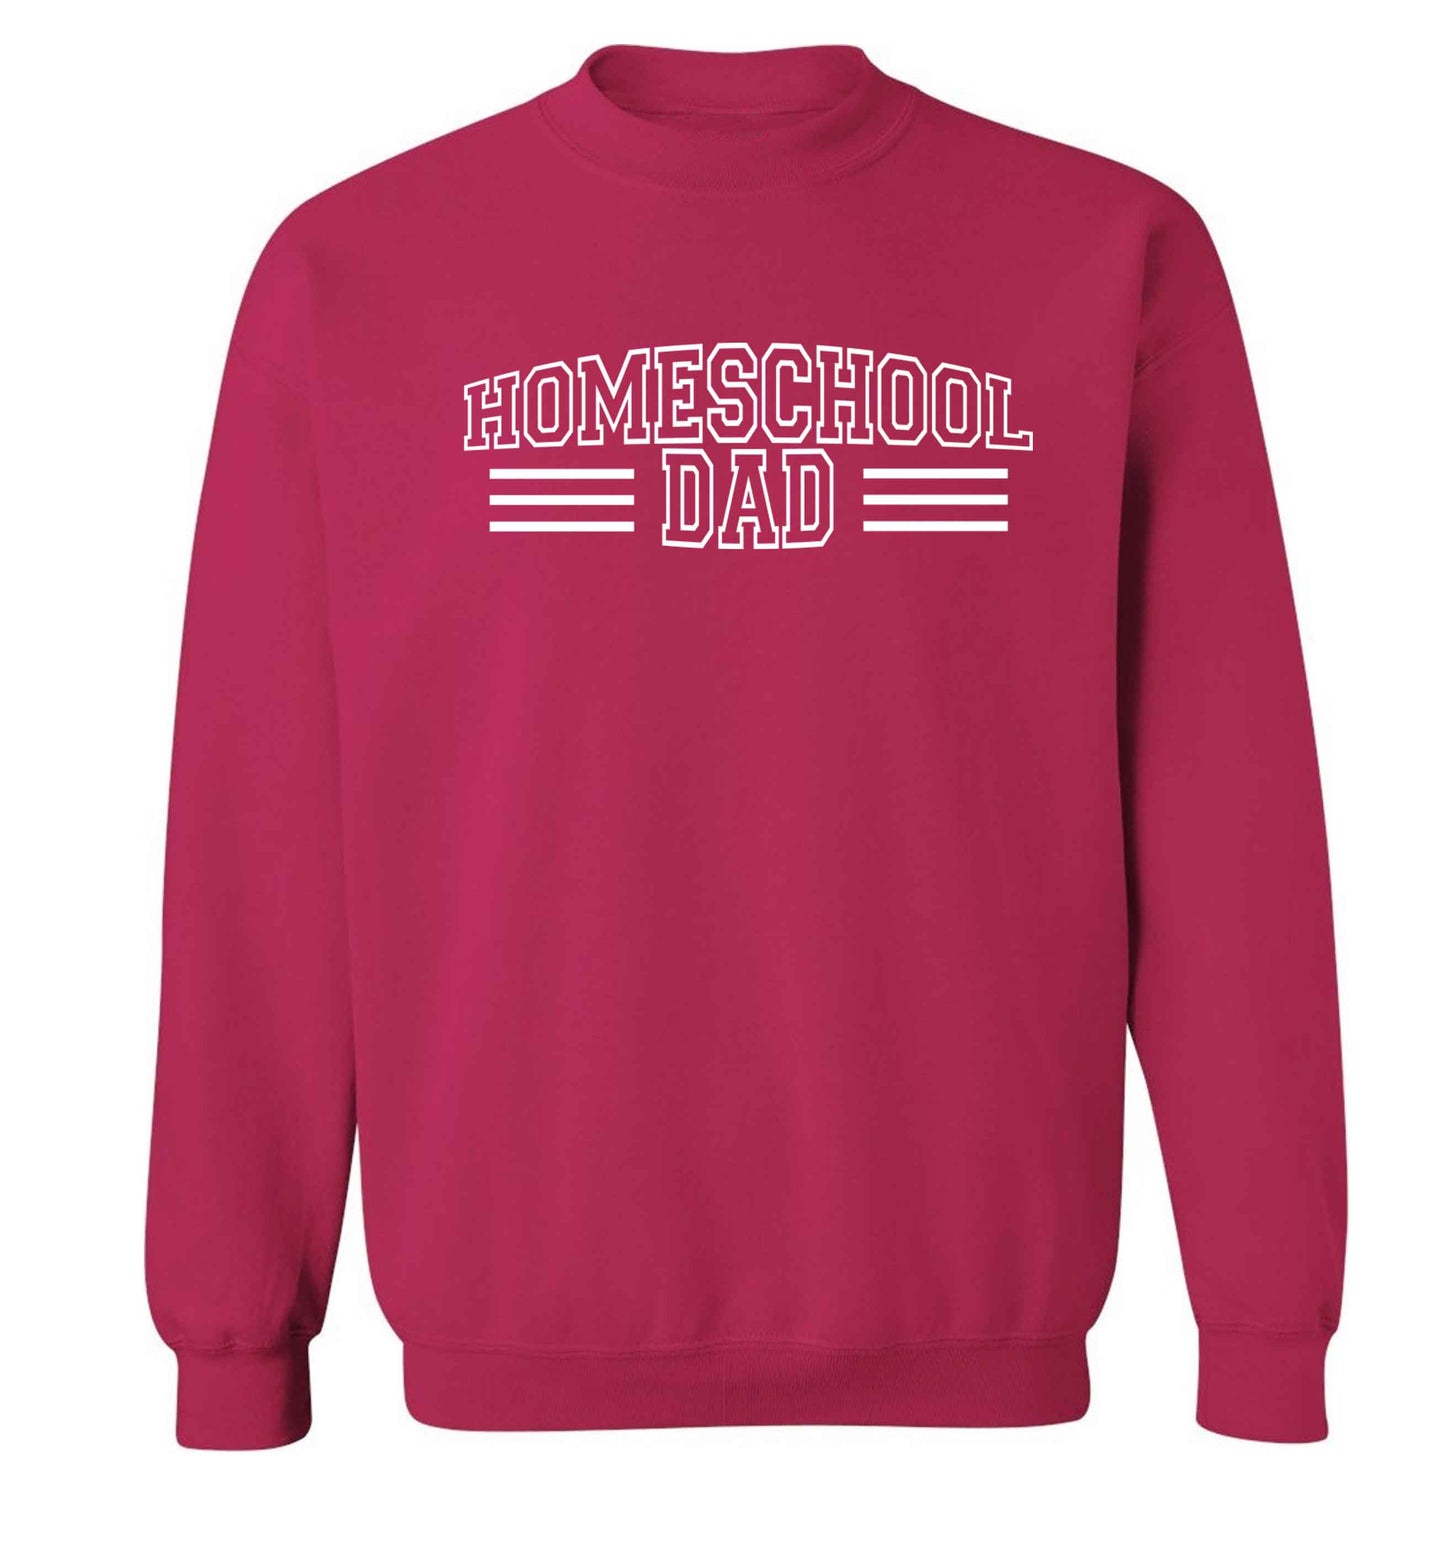 Homeschool dad Adult's unisex pink Sweater 2XL